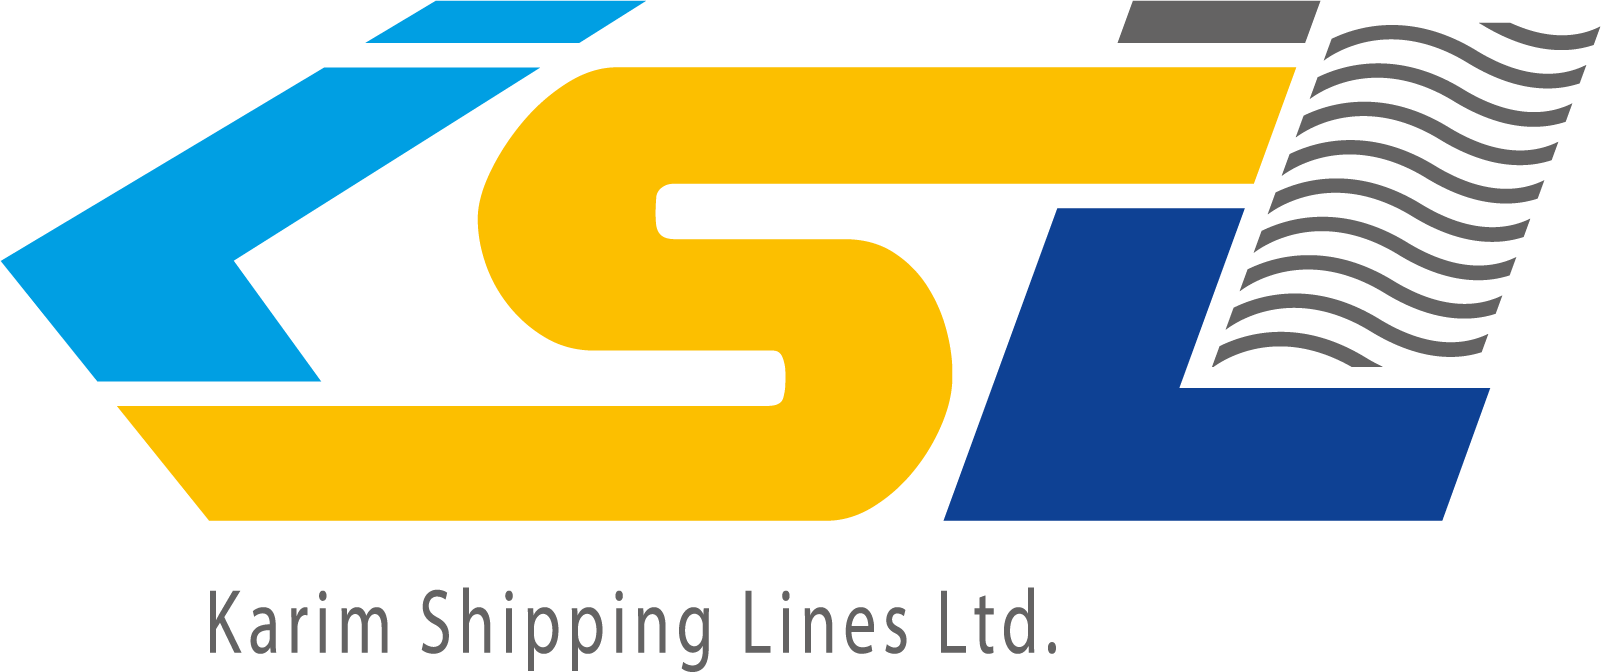 Karim Shipping Lines Ltd